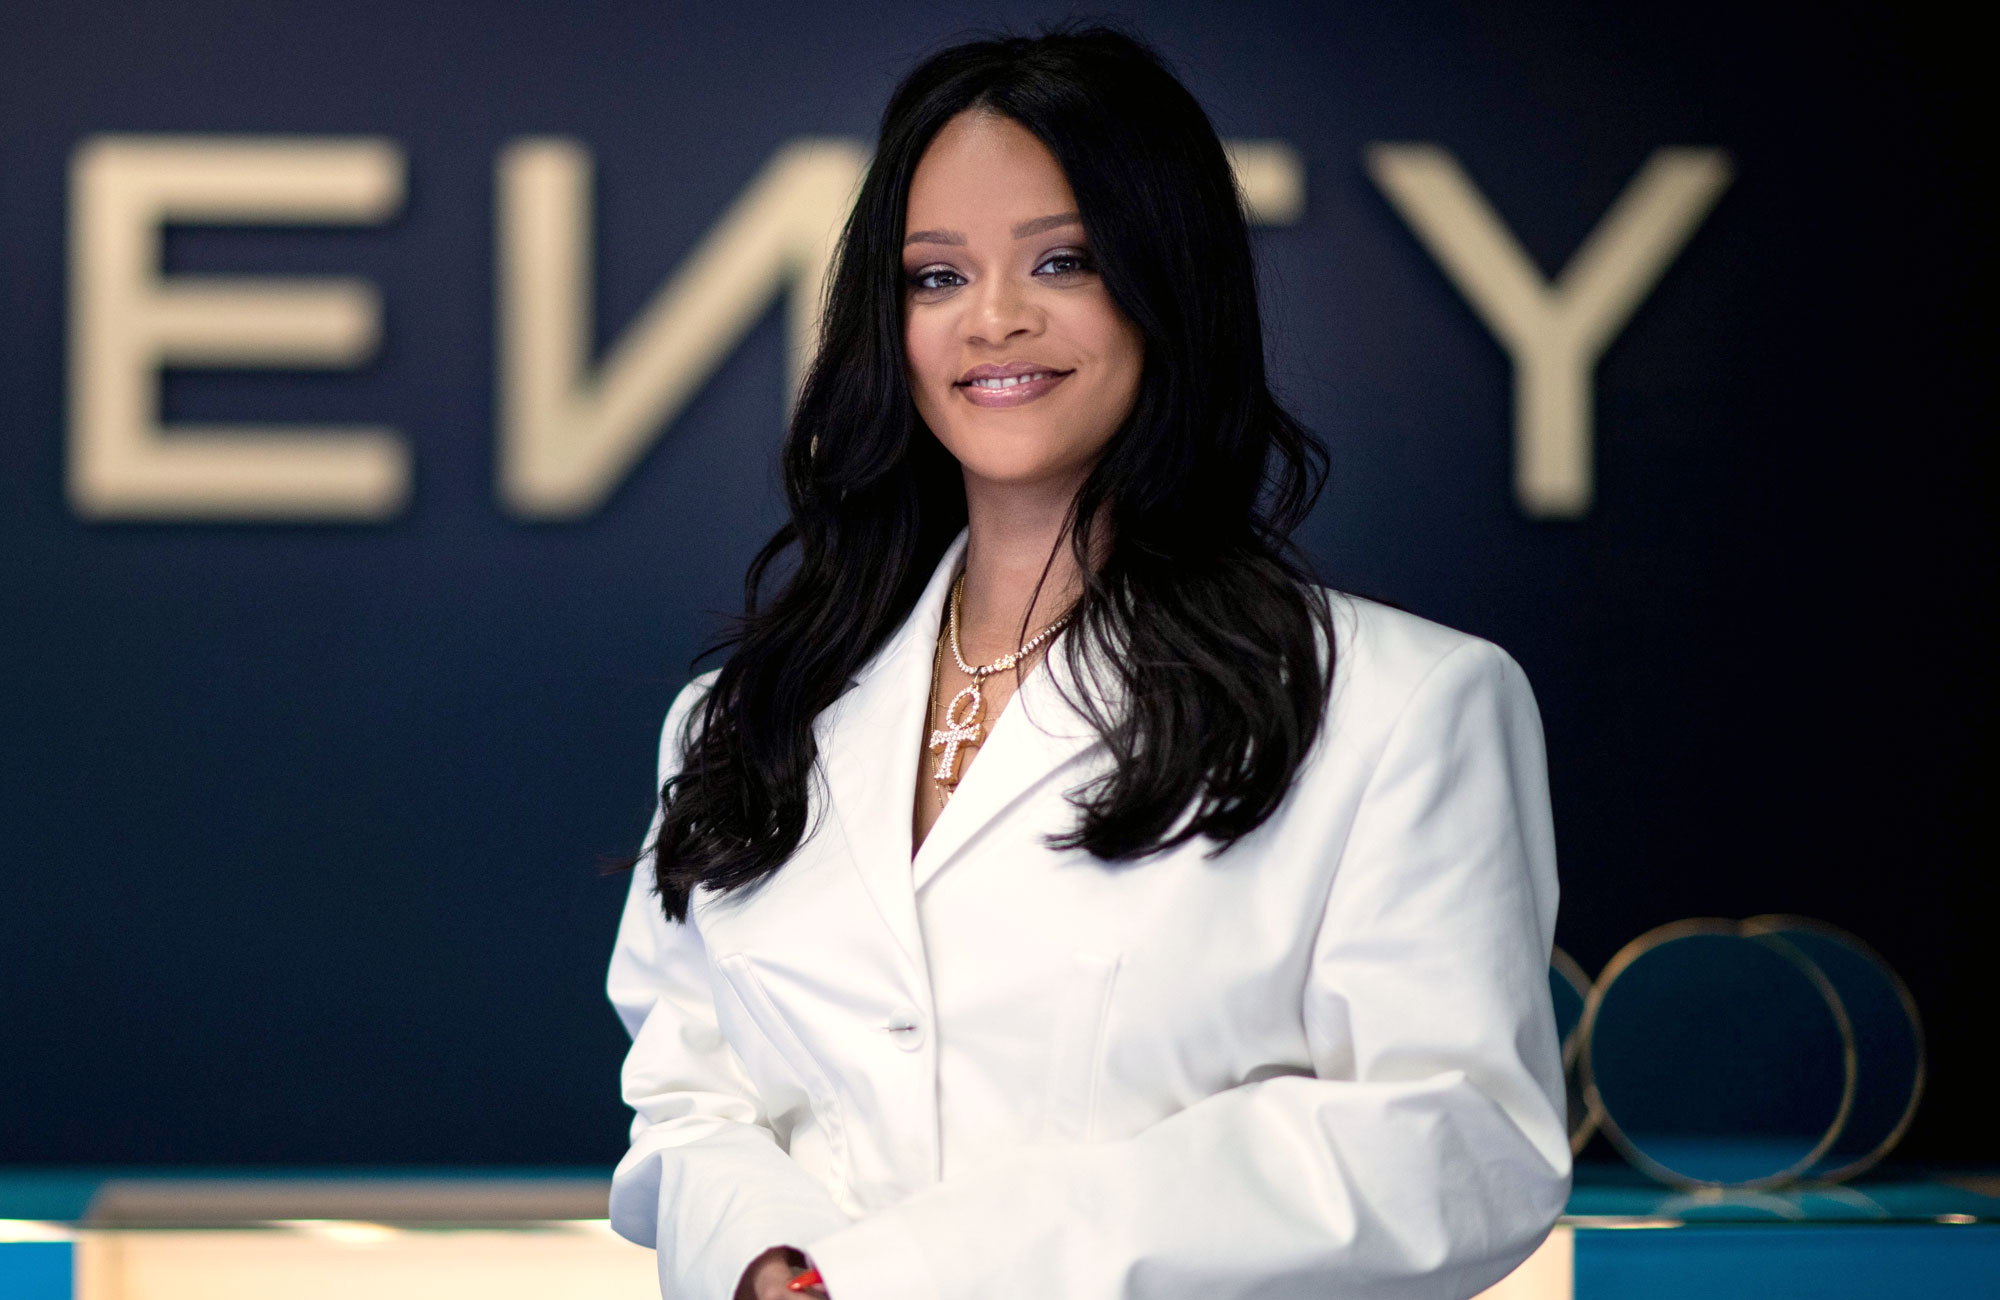 Rihanna Tops Forbes' List as the Richest Female Musician